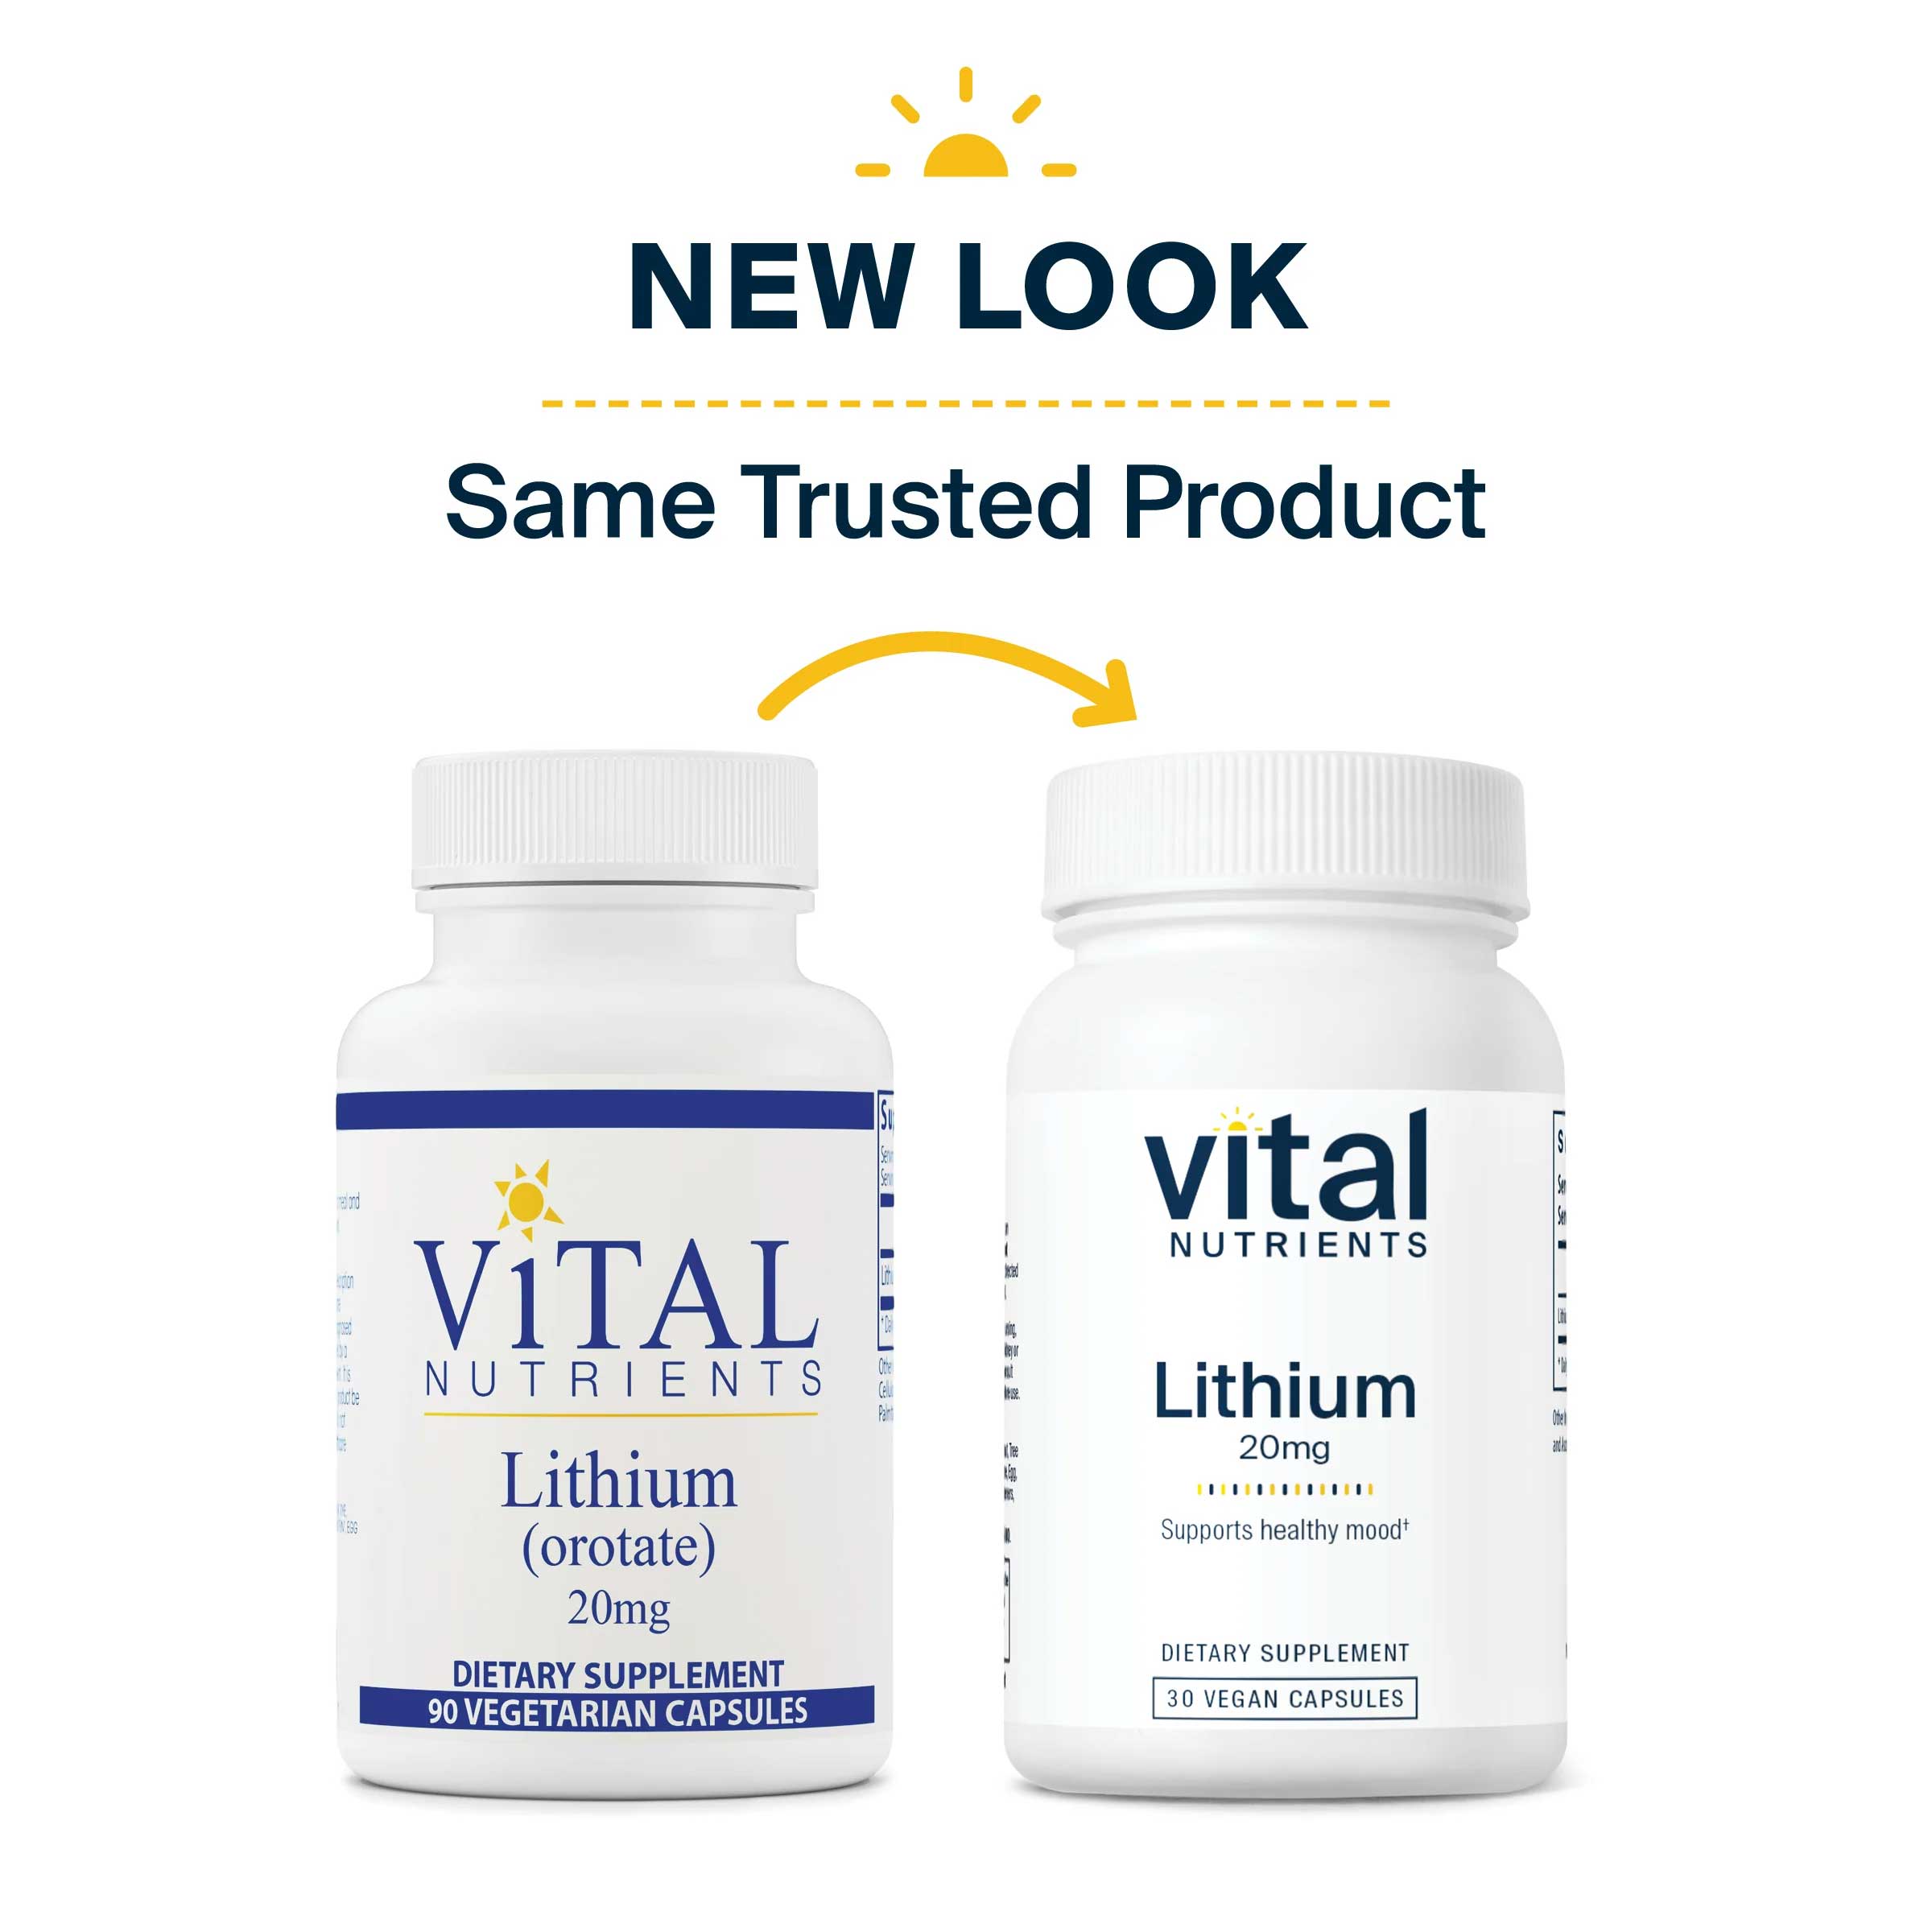 Vital Nutrients Lithium (orotate) 20mg New Look